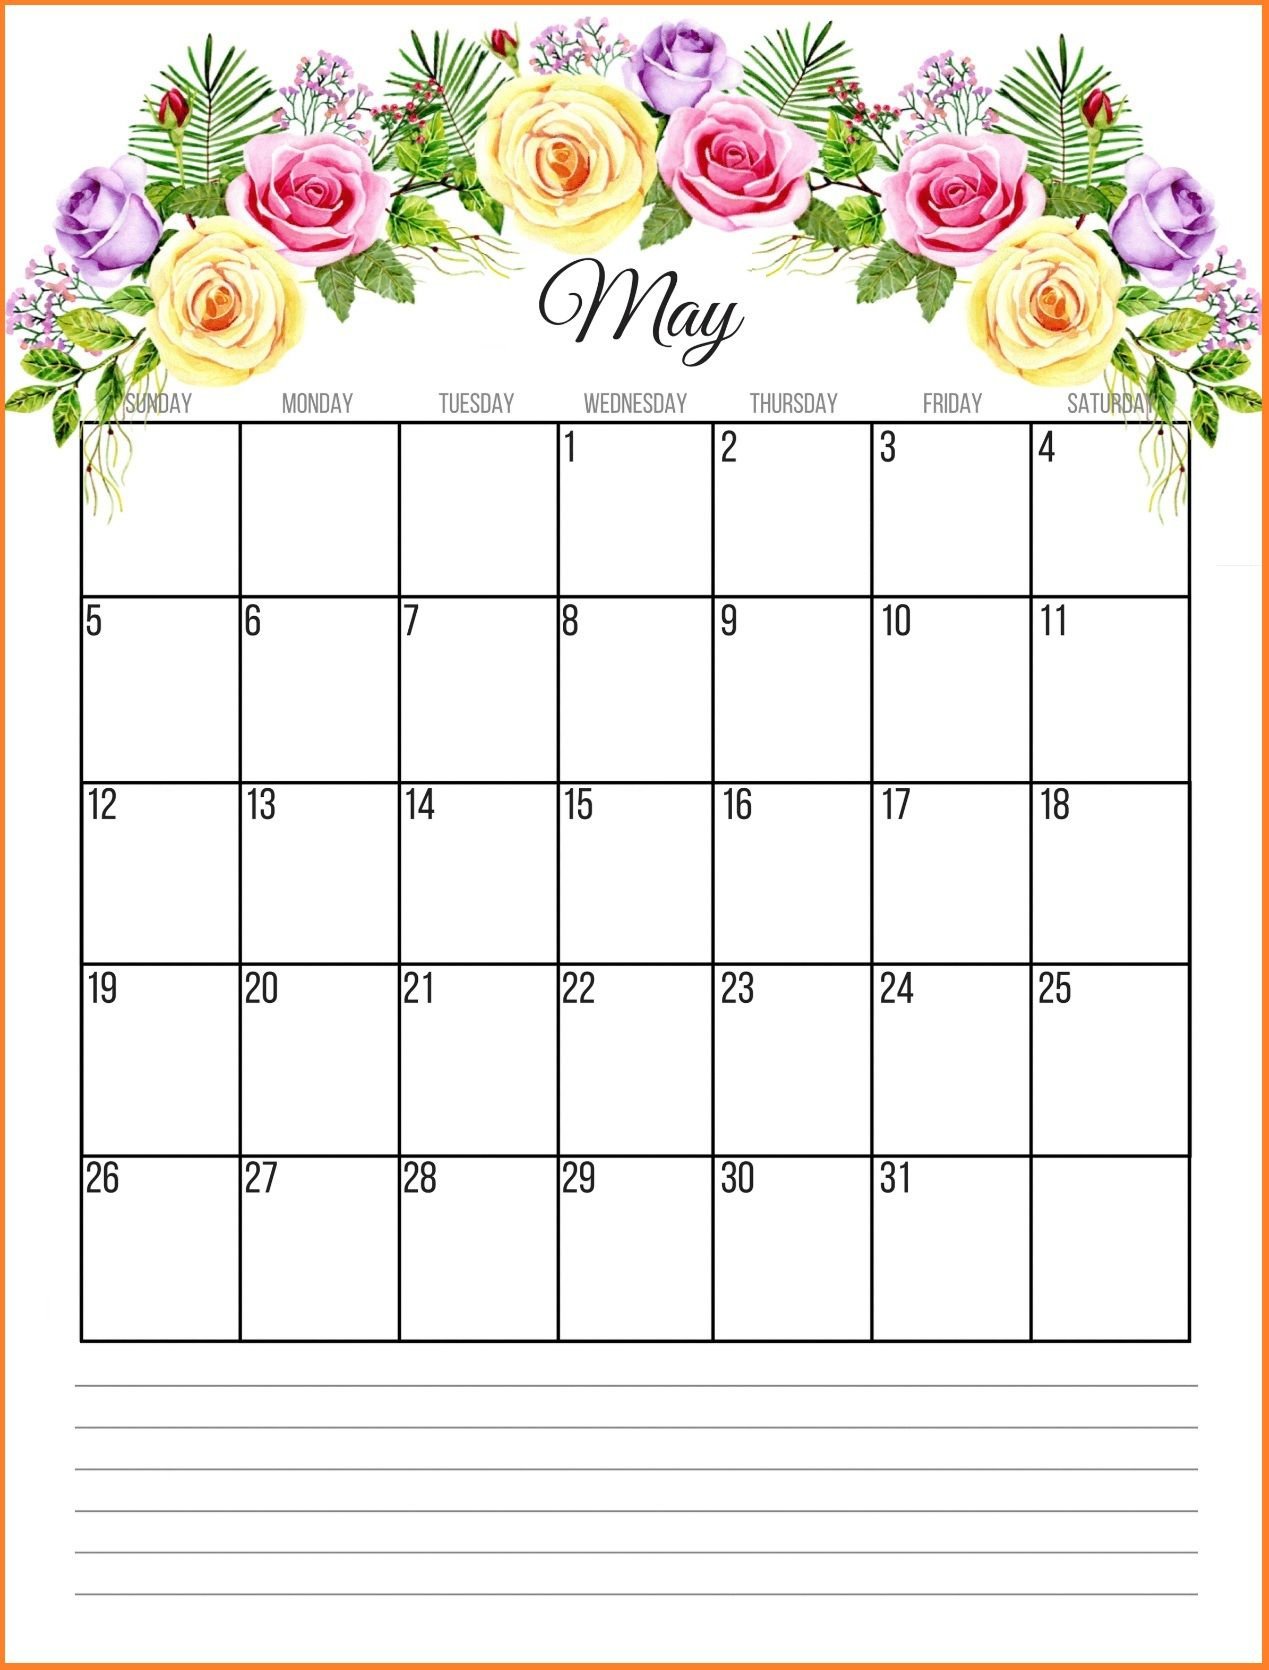 May 2019 Floral Calendar | Calendar Printables October